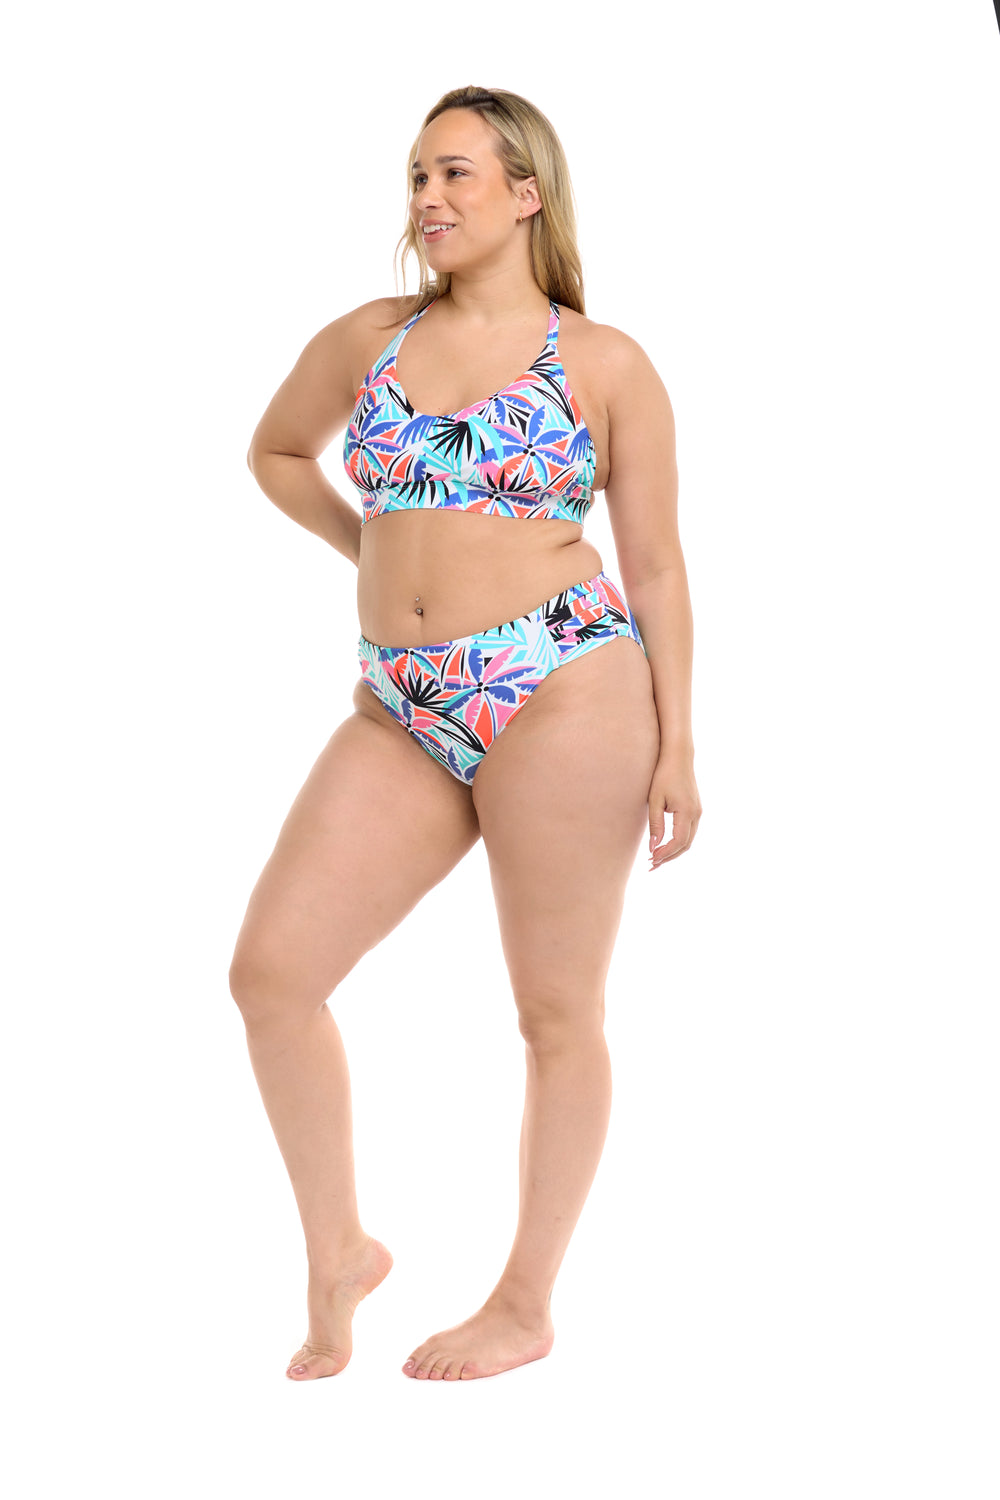 Miami Ruth Plus Size Fixed Triangle Swim Top - Sunset